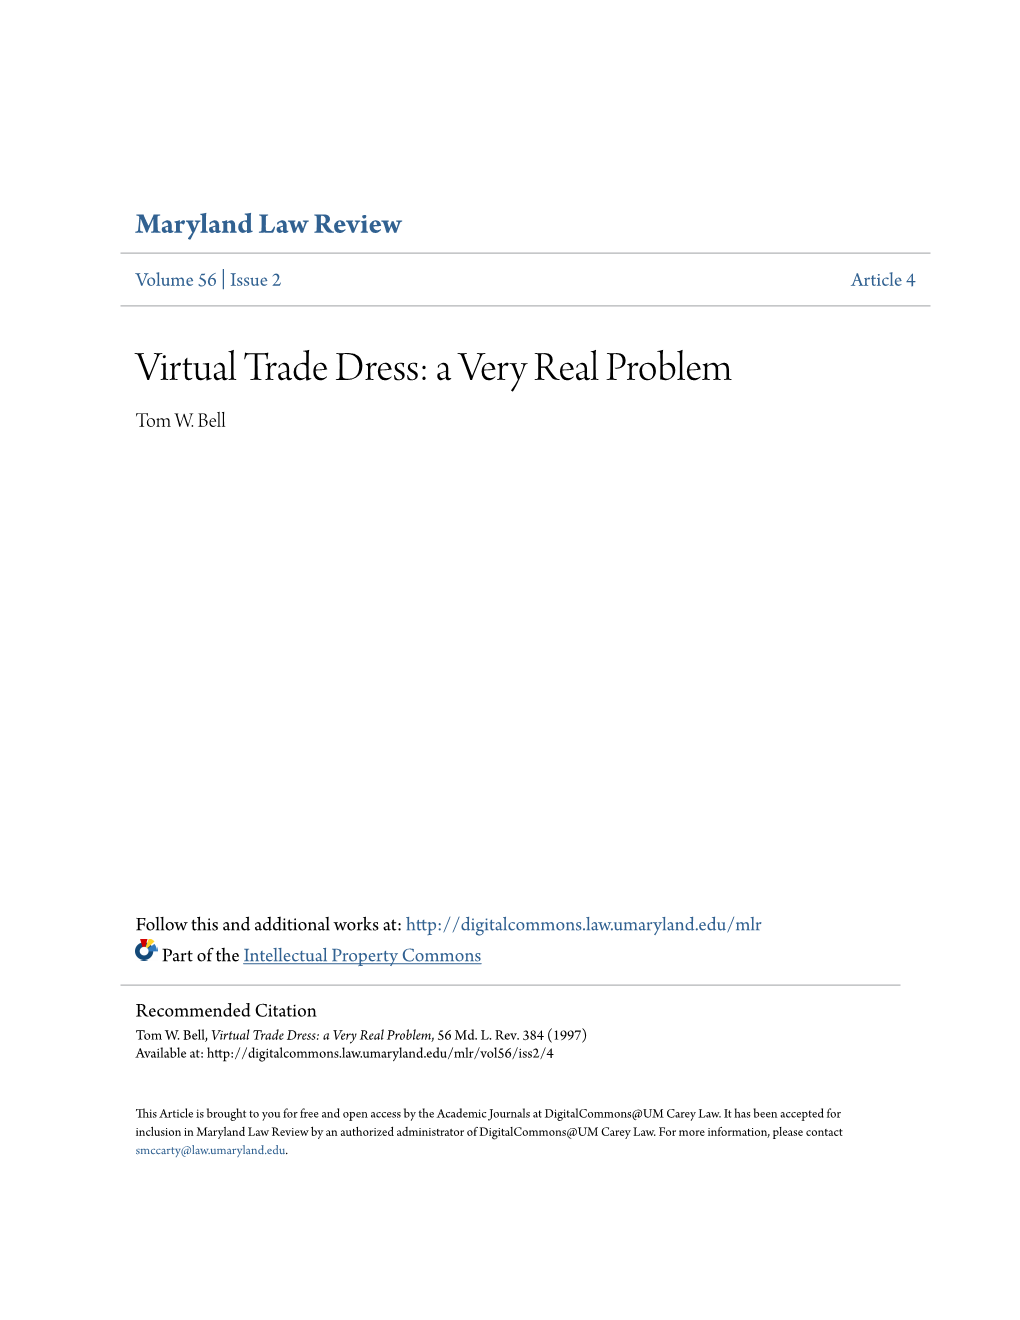 Virtual Trade Dress: a Very Real Problem Tom W